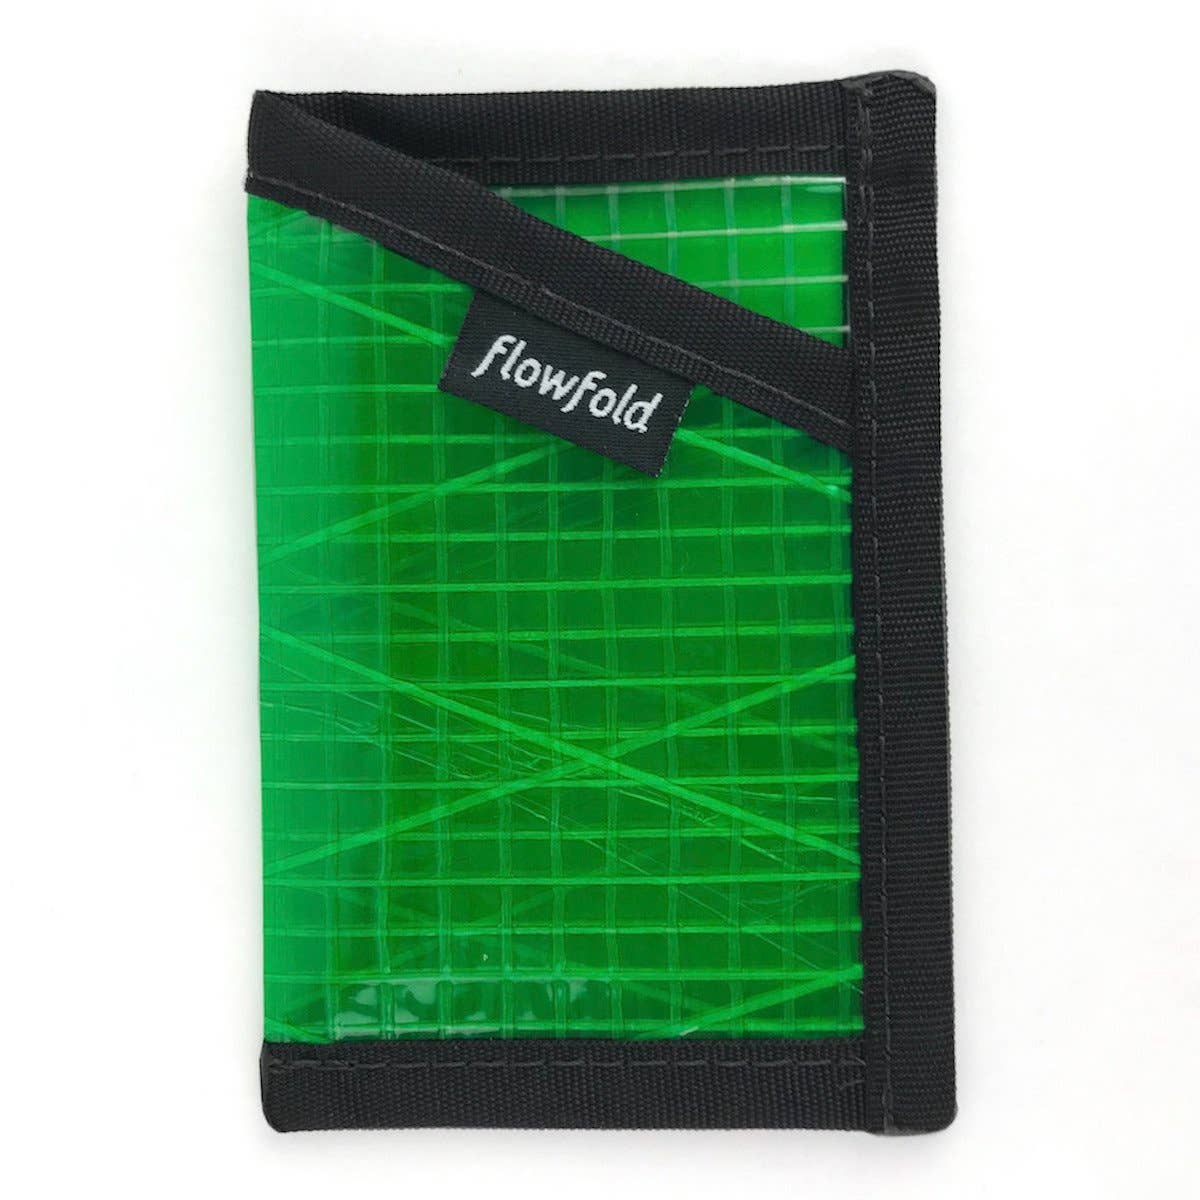 Flowfold  |  Recycled Sailcloth Minimalist Card Holder Wallet, Wallet, Flowfold, Defiance Outdoor Gear Co.